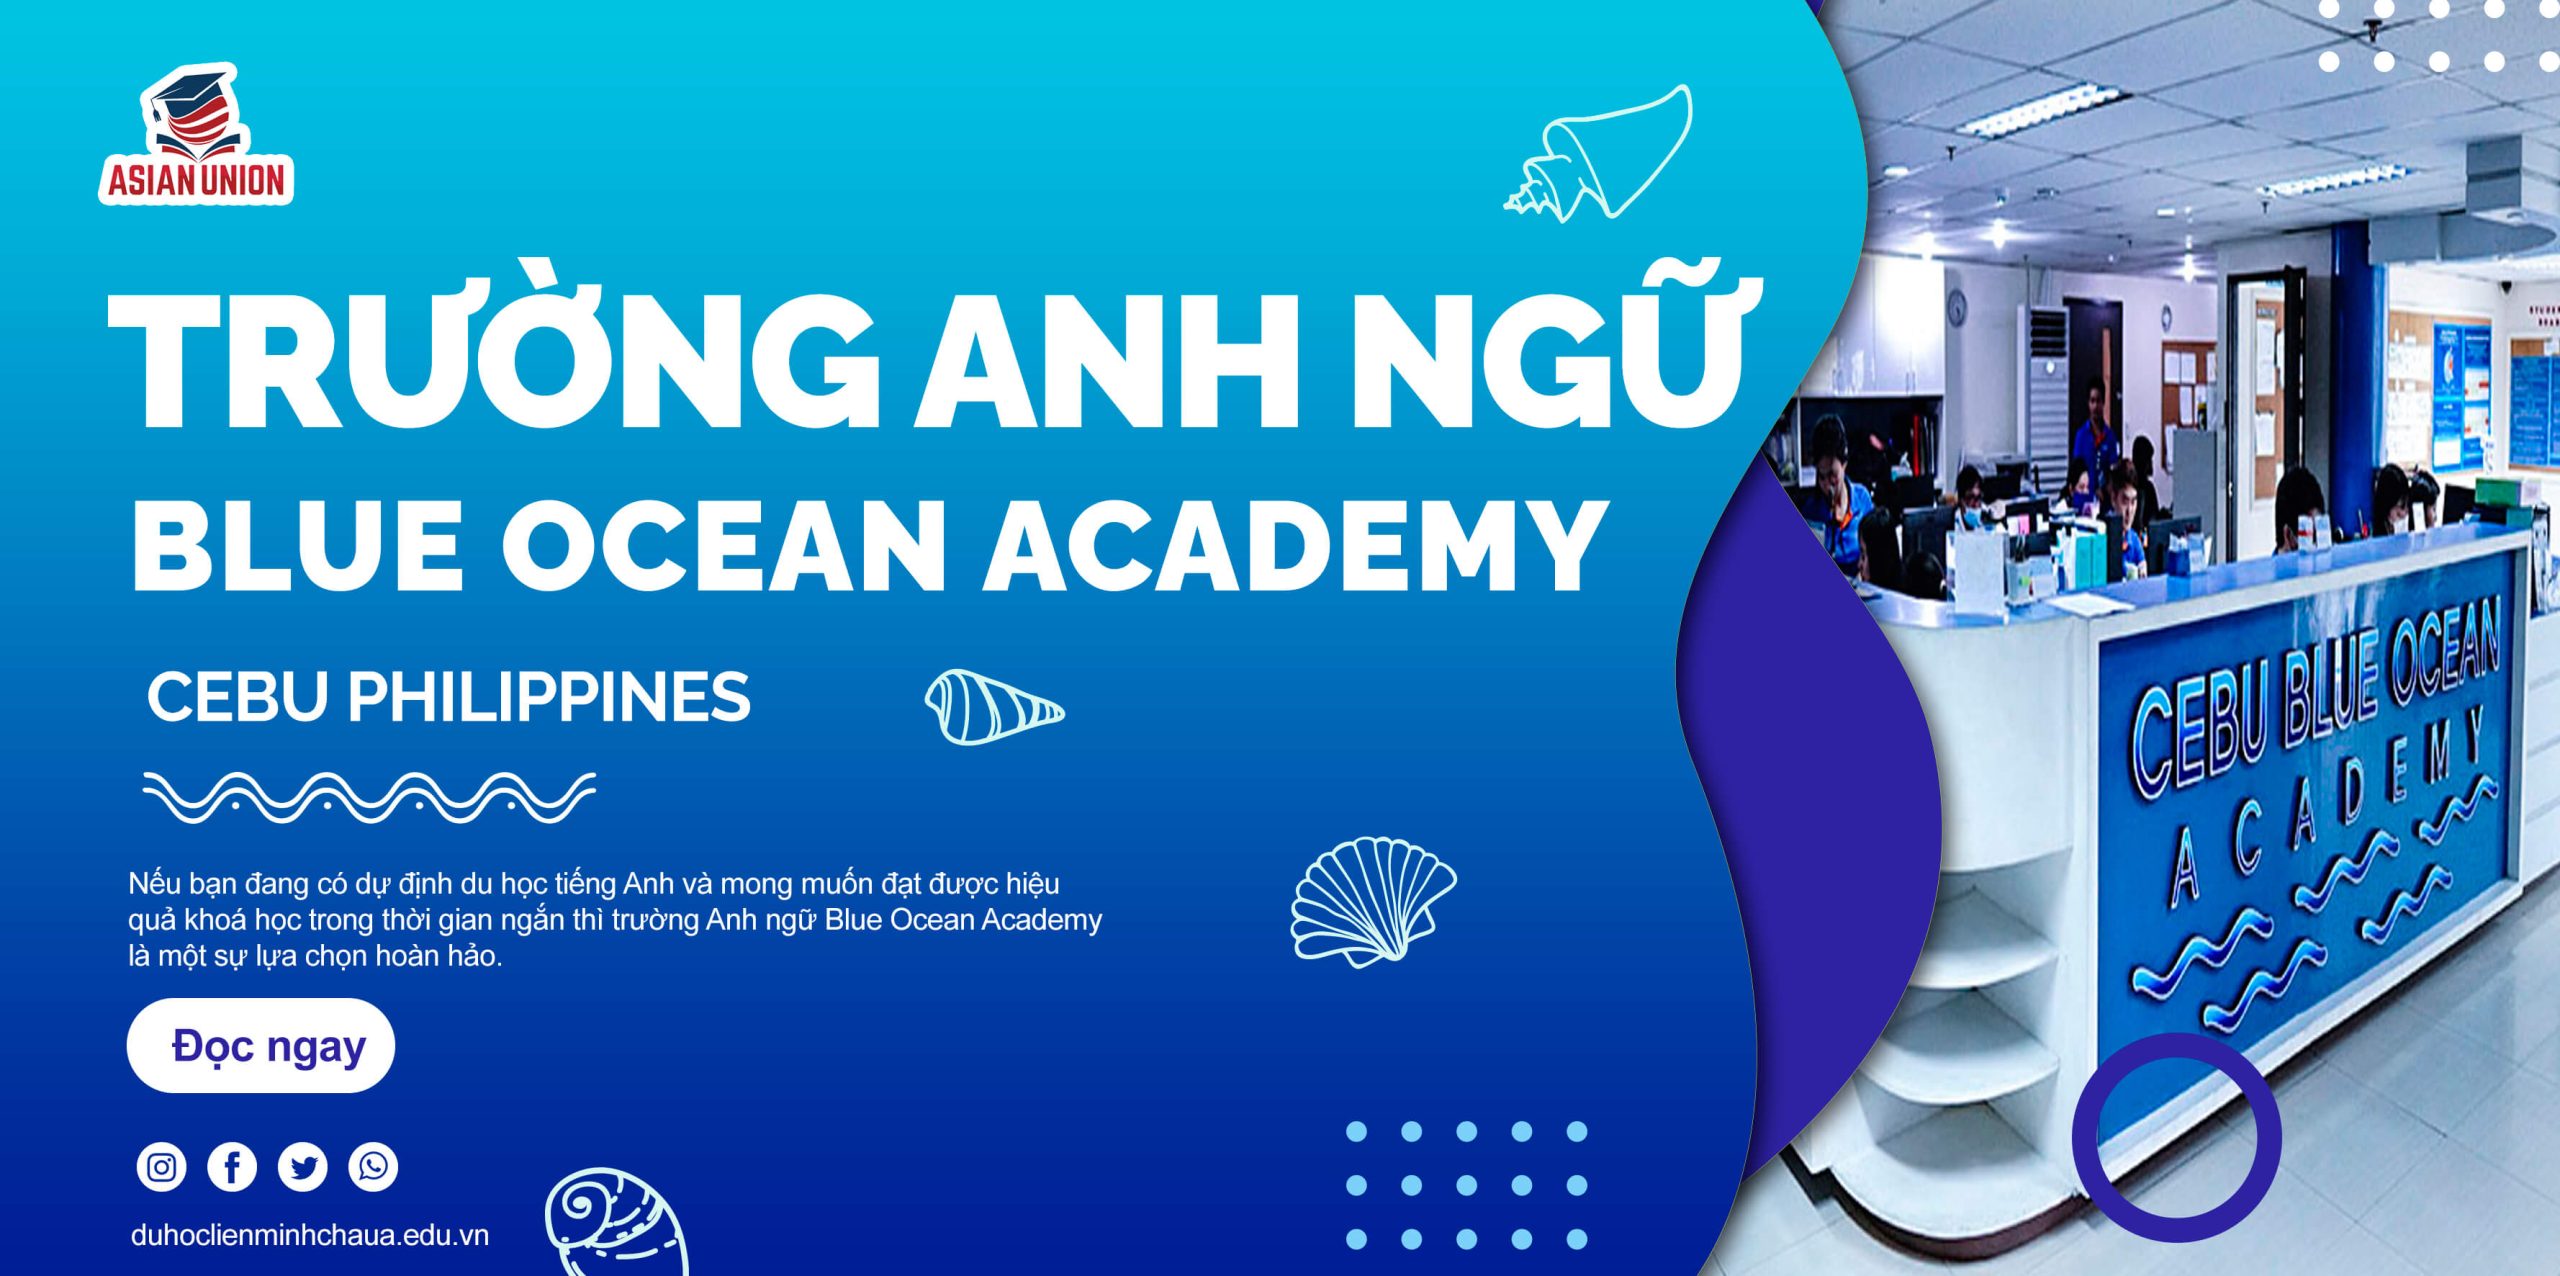 Tổng quan trường Anh ngữ Blue Ocean Academy Cebu Philippines